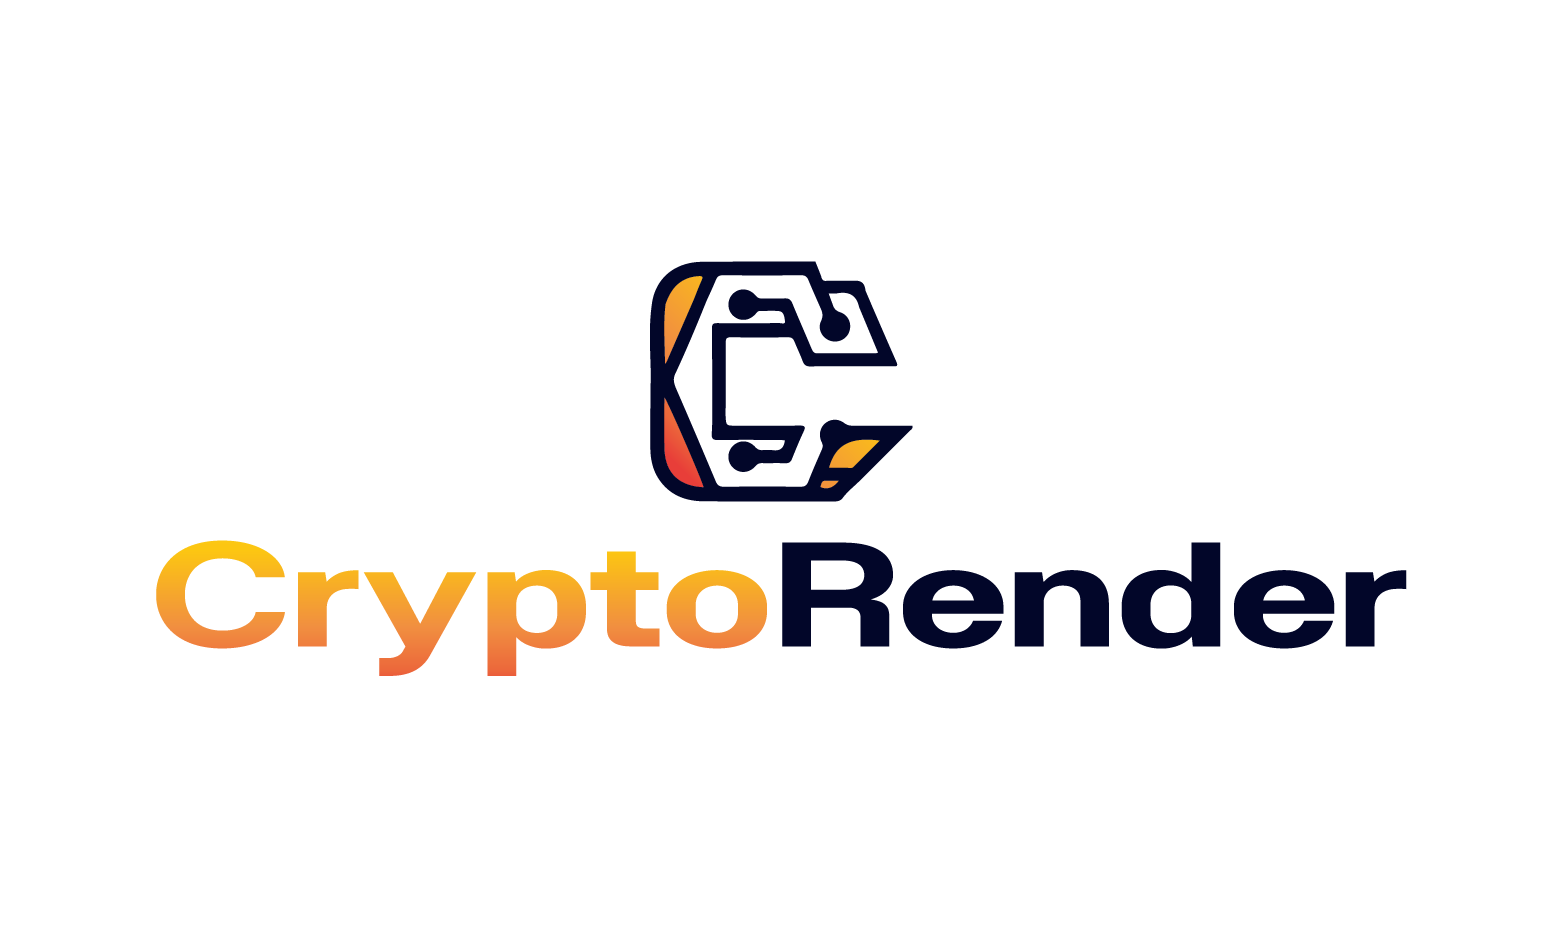 CryptoRender.com - Creative brandable domain for sale